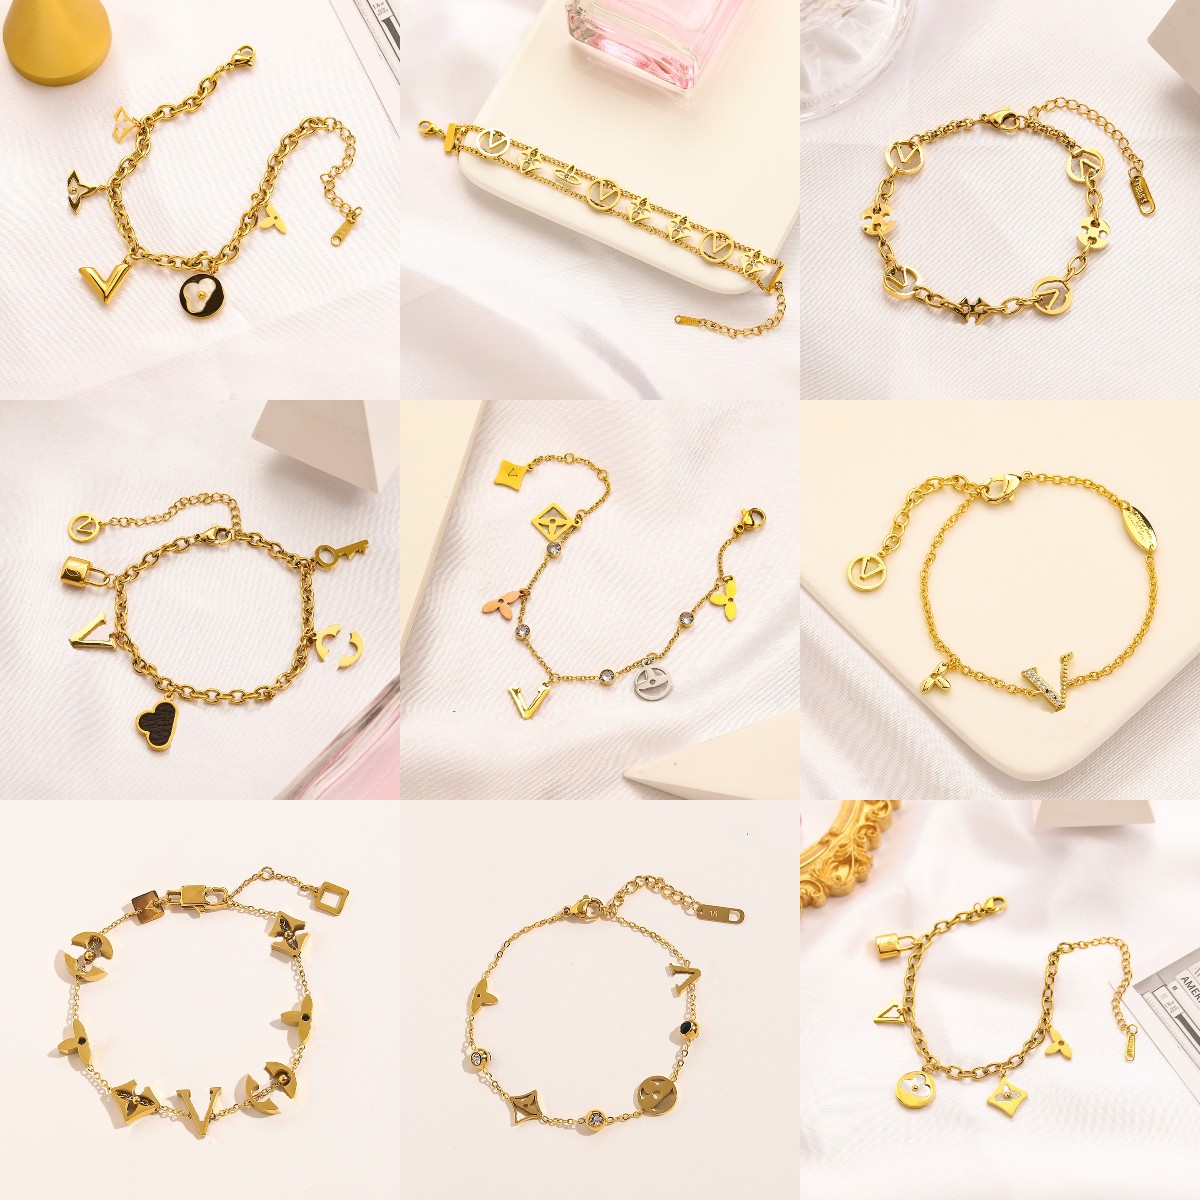 Berühmte Designer-Armbänder, luxuriöse Goldkette, Modeschmuck, Mädchen-Perlen-Buchstabenschloss, Liebesarmband, Premium-Hochzeitsfeier-Schmuckzubehör